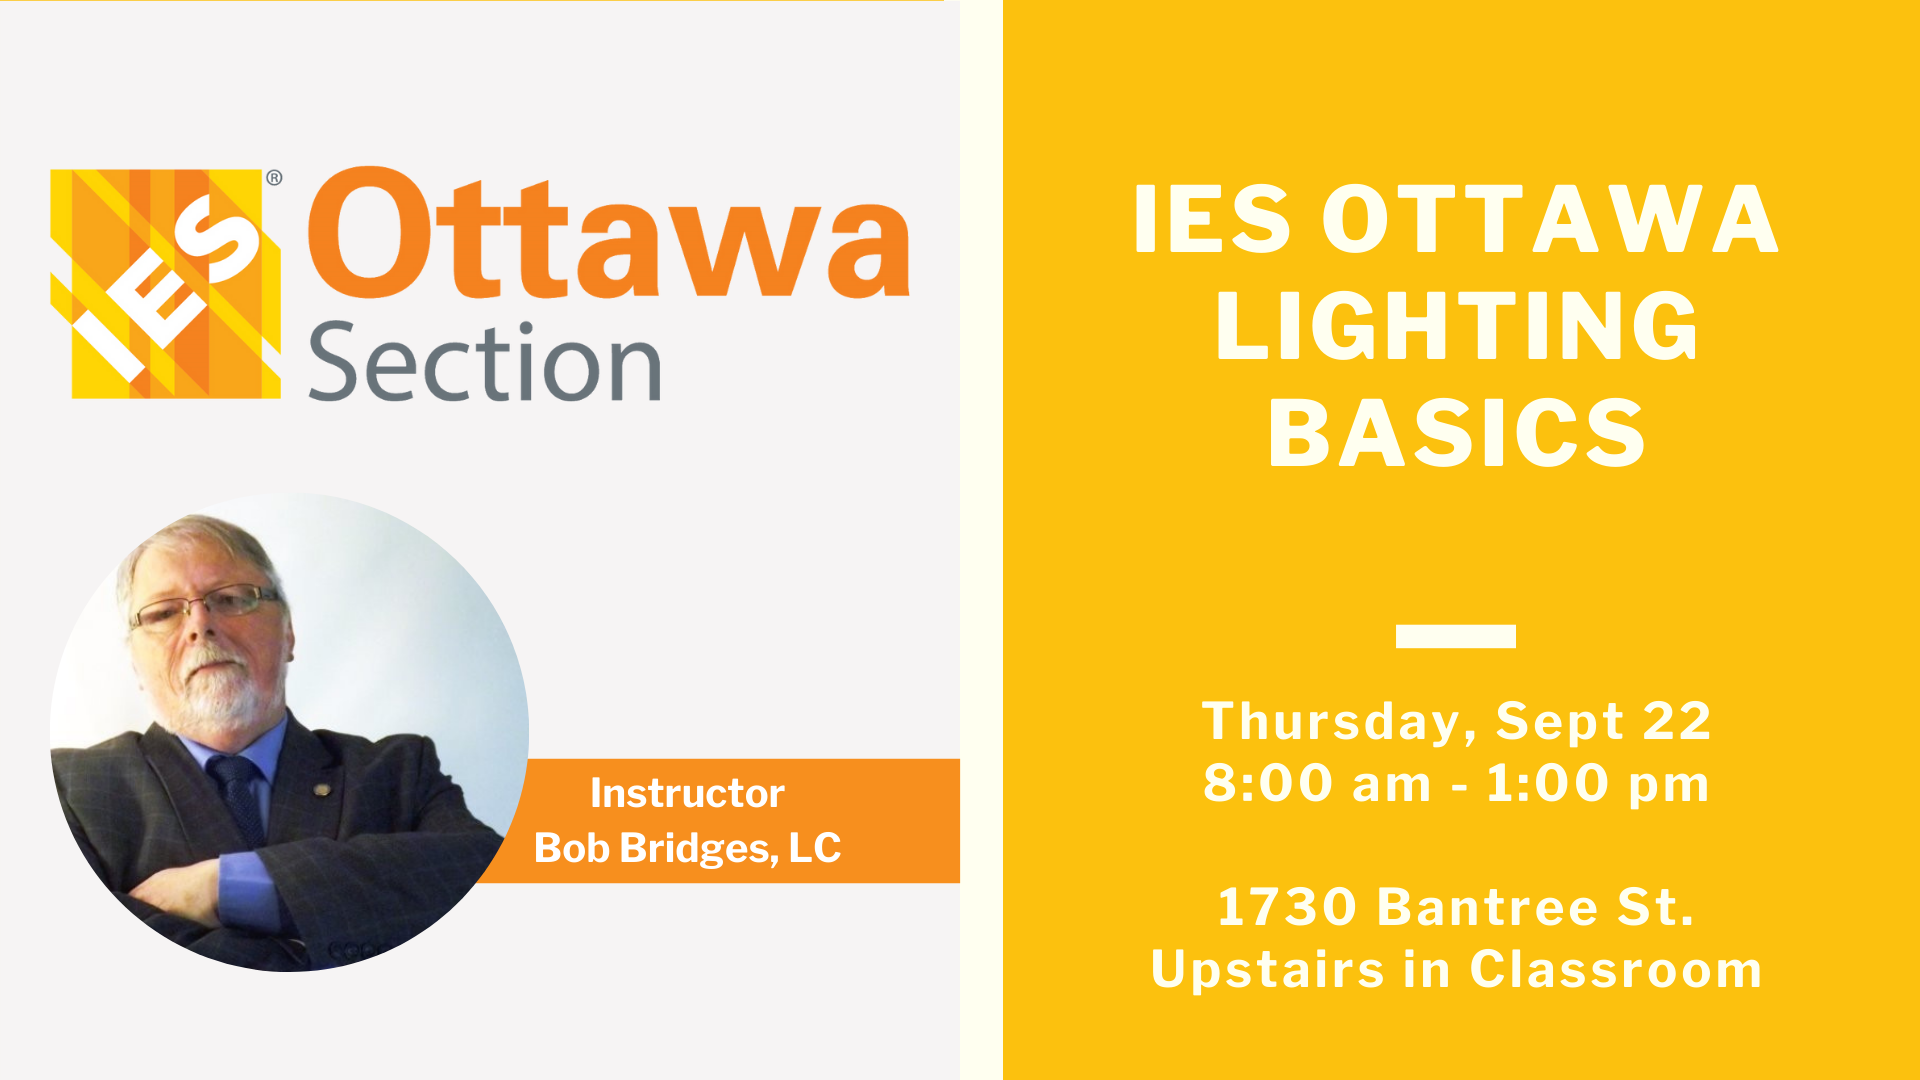 IES Ottawa Lighting Basics - September 22, 8:00 am to 1:00 pm at Graybar Canada. Register via Eventbrite link